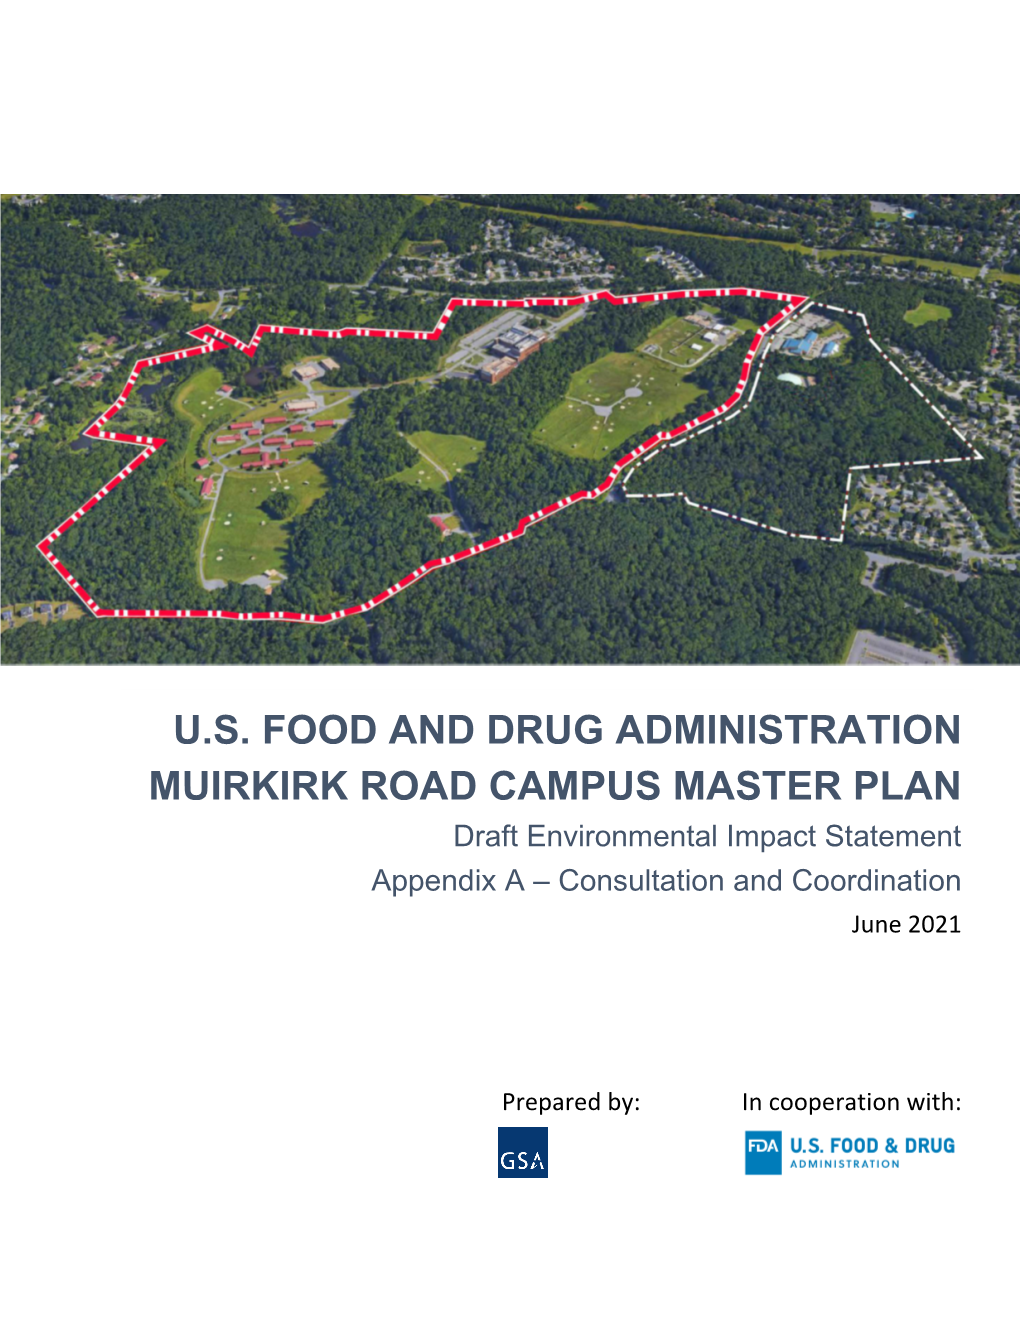 MRC Master Plan Draft EIS Appendix A